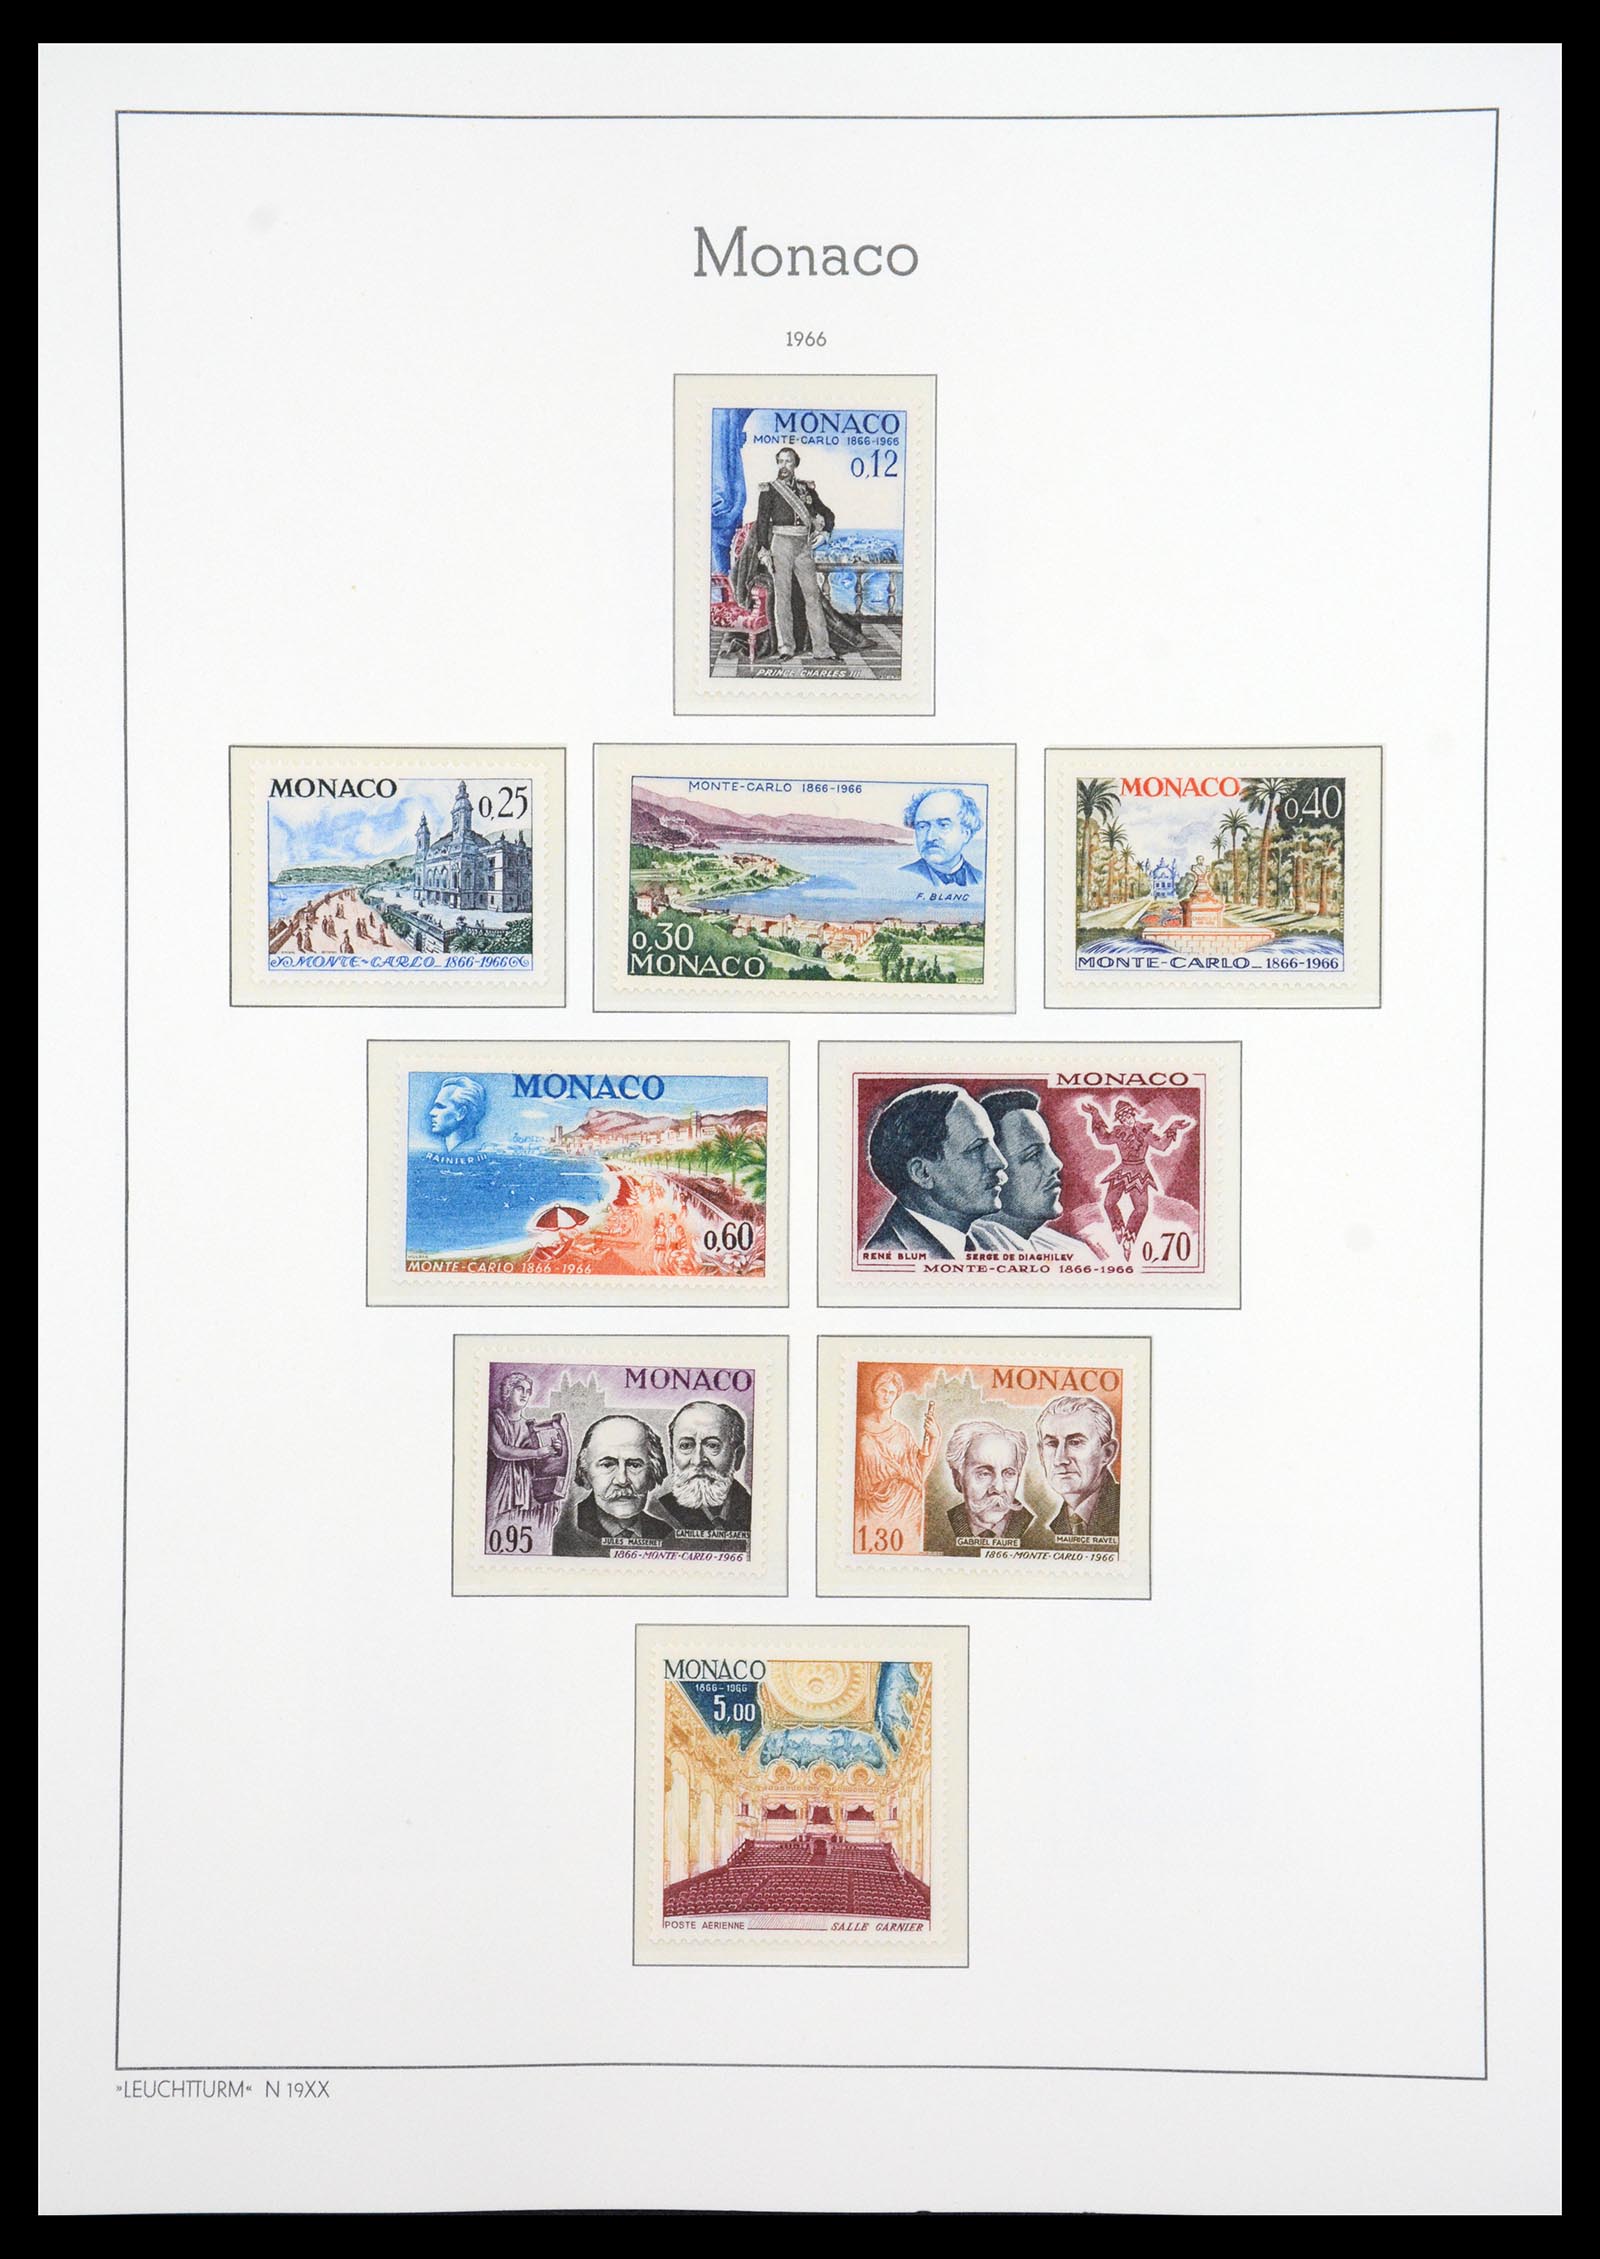 36735 092 - Stamp collection 36735 Monaco 1885-1966.